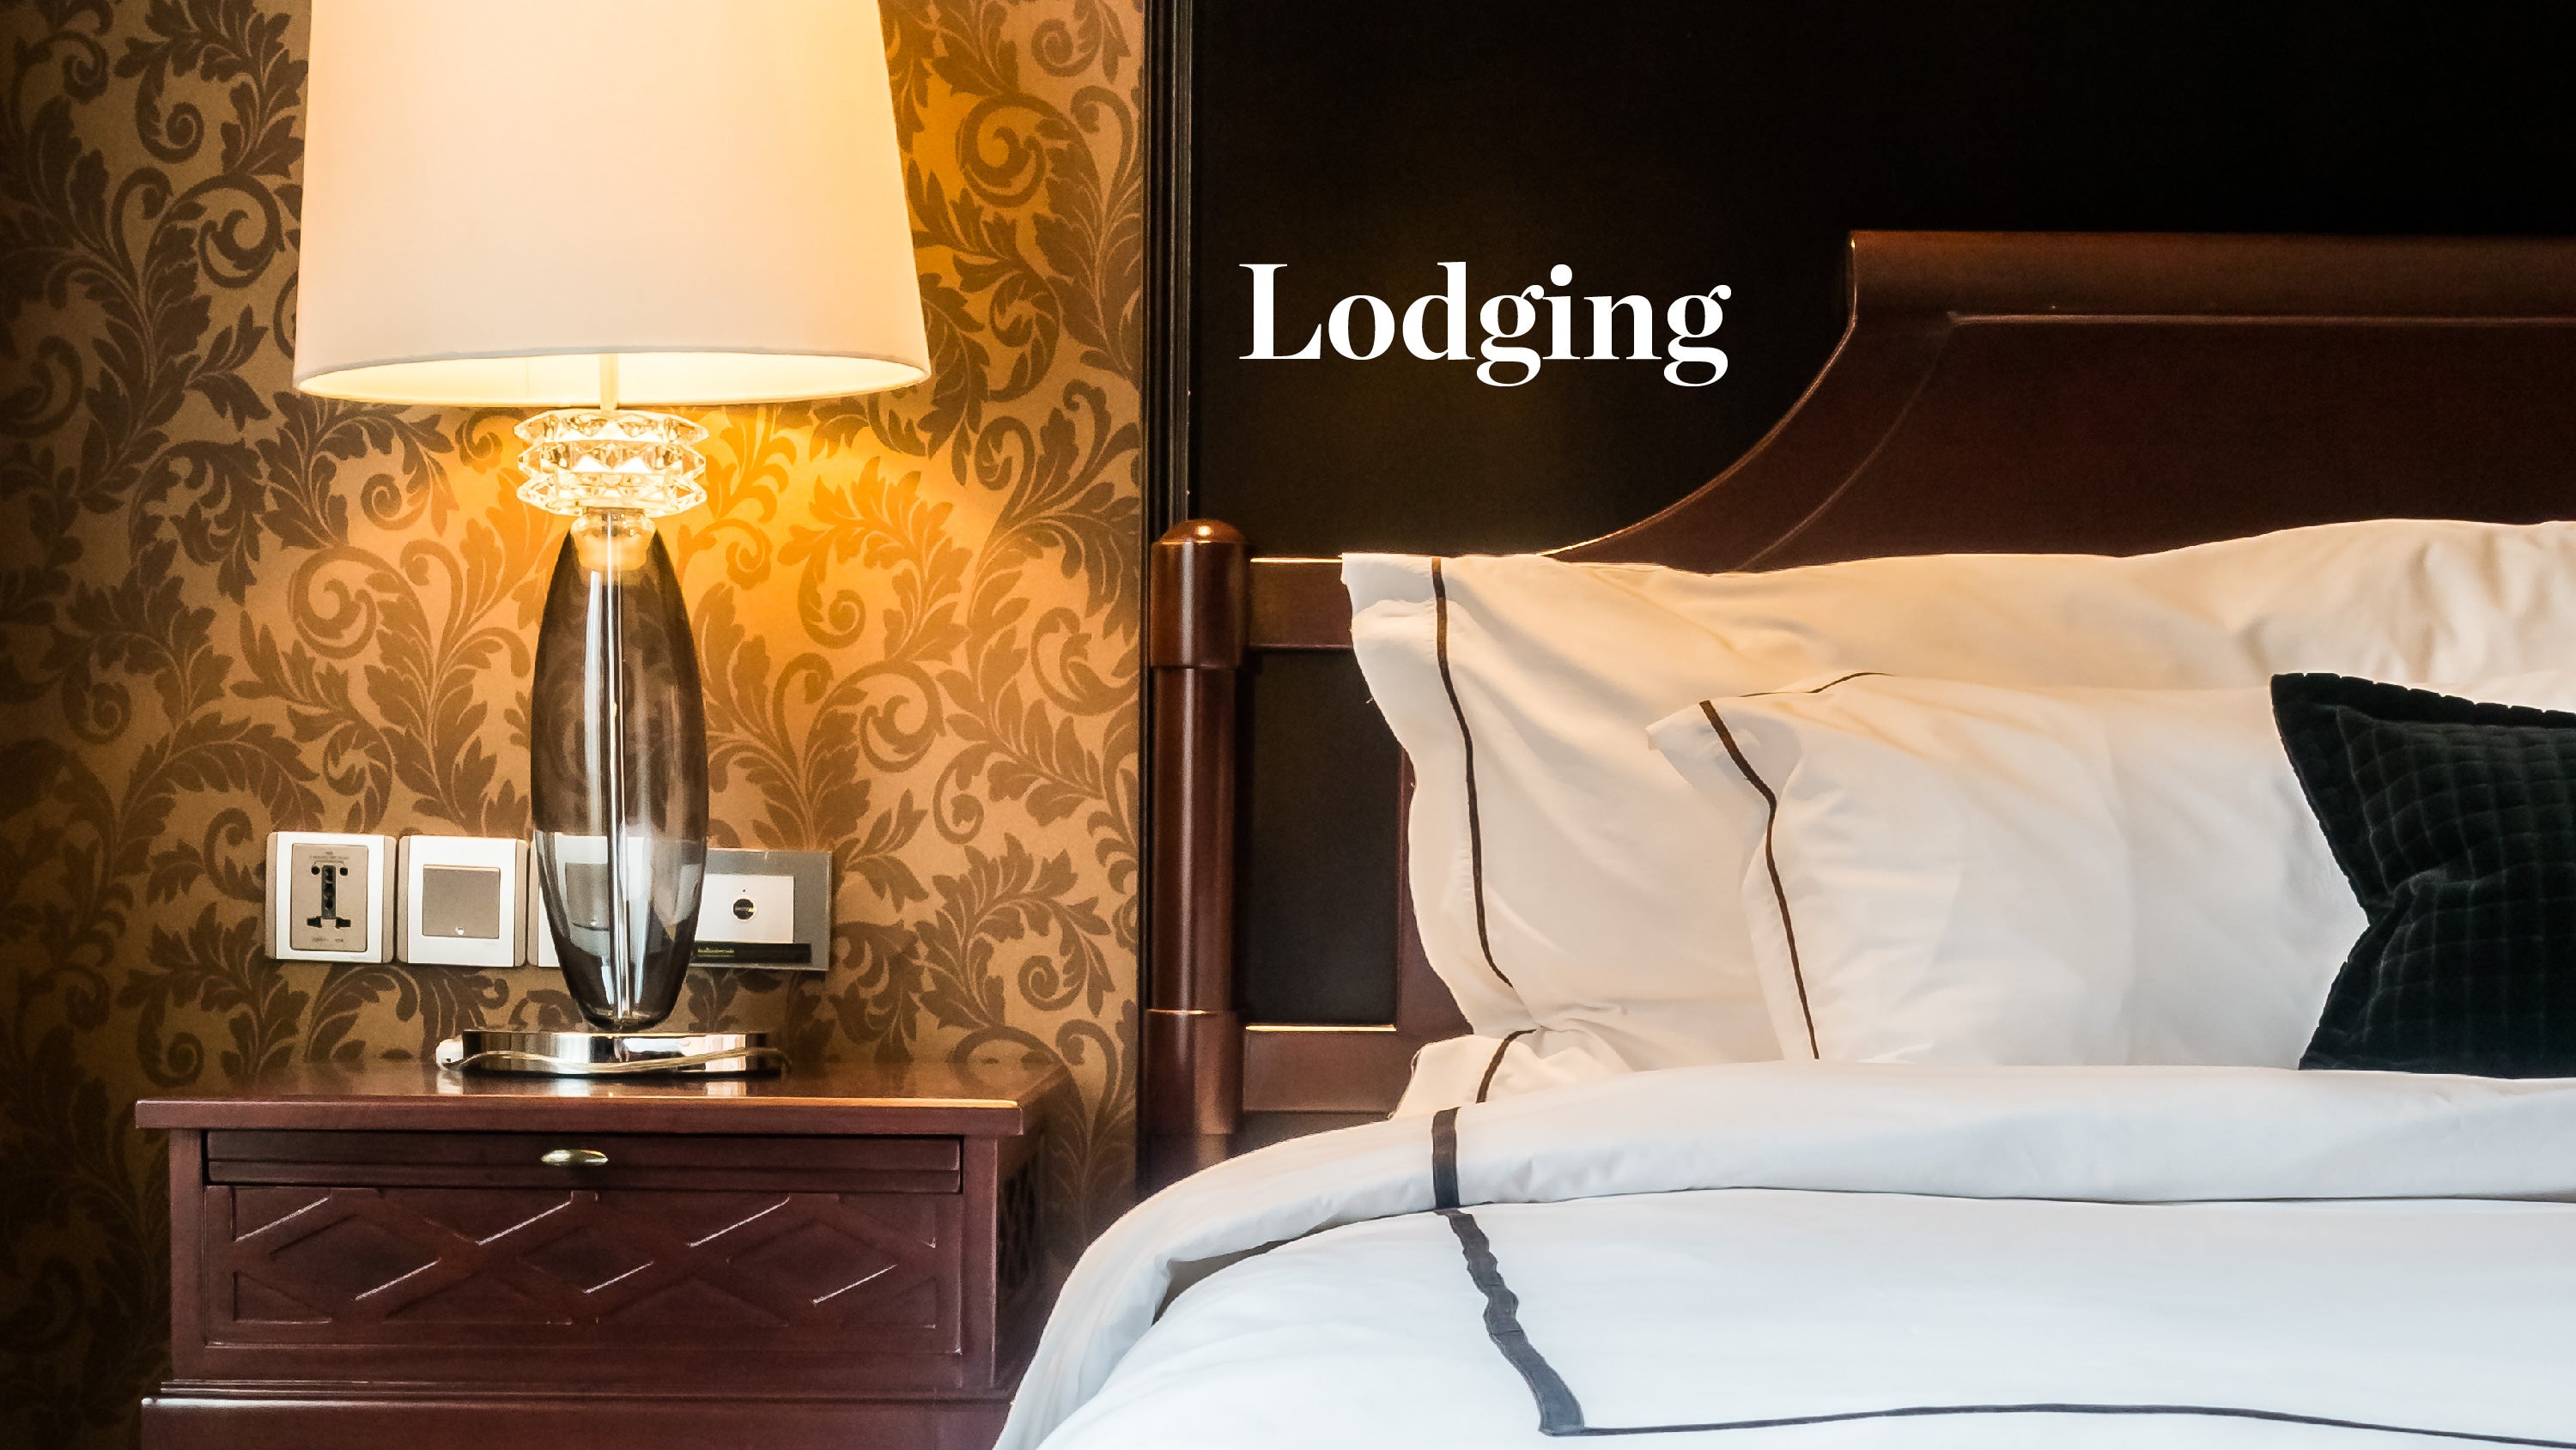 lodging-slide